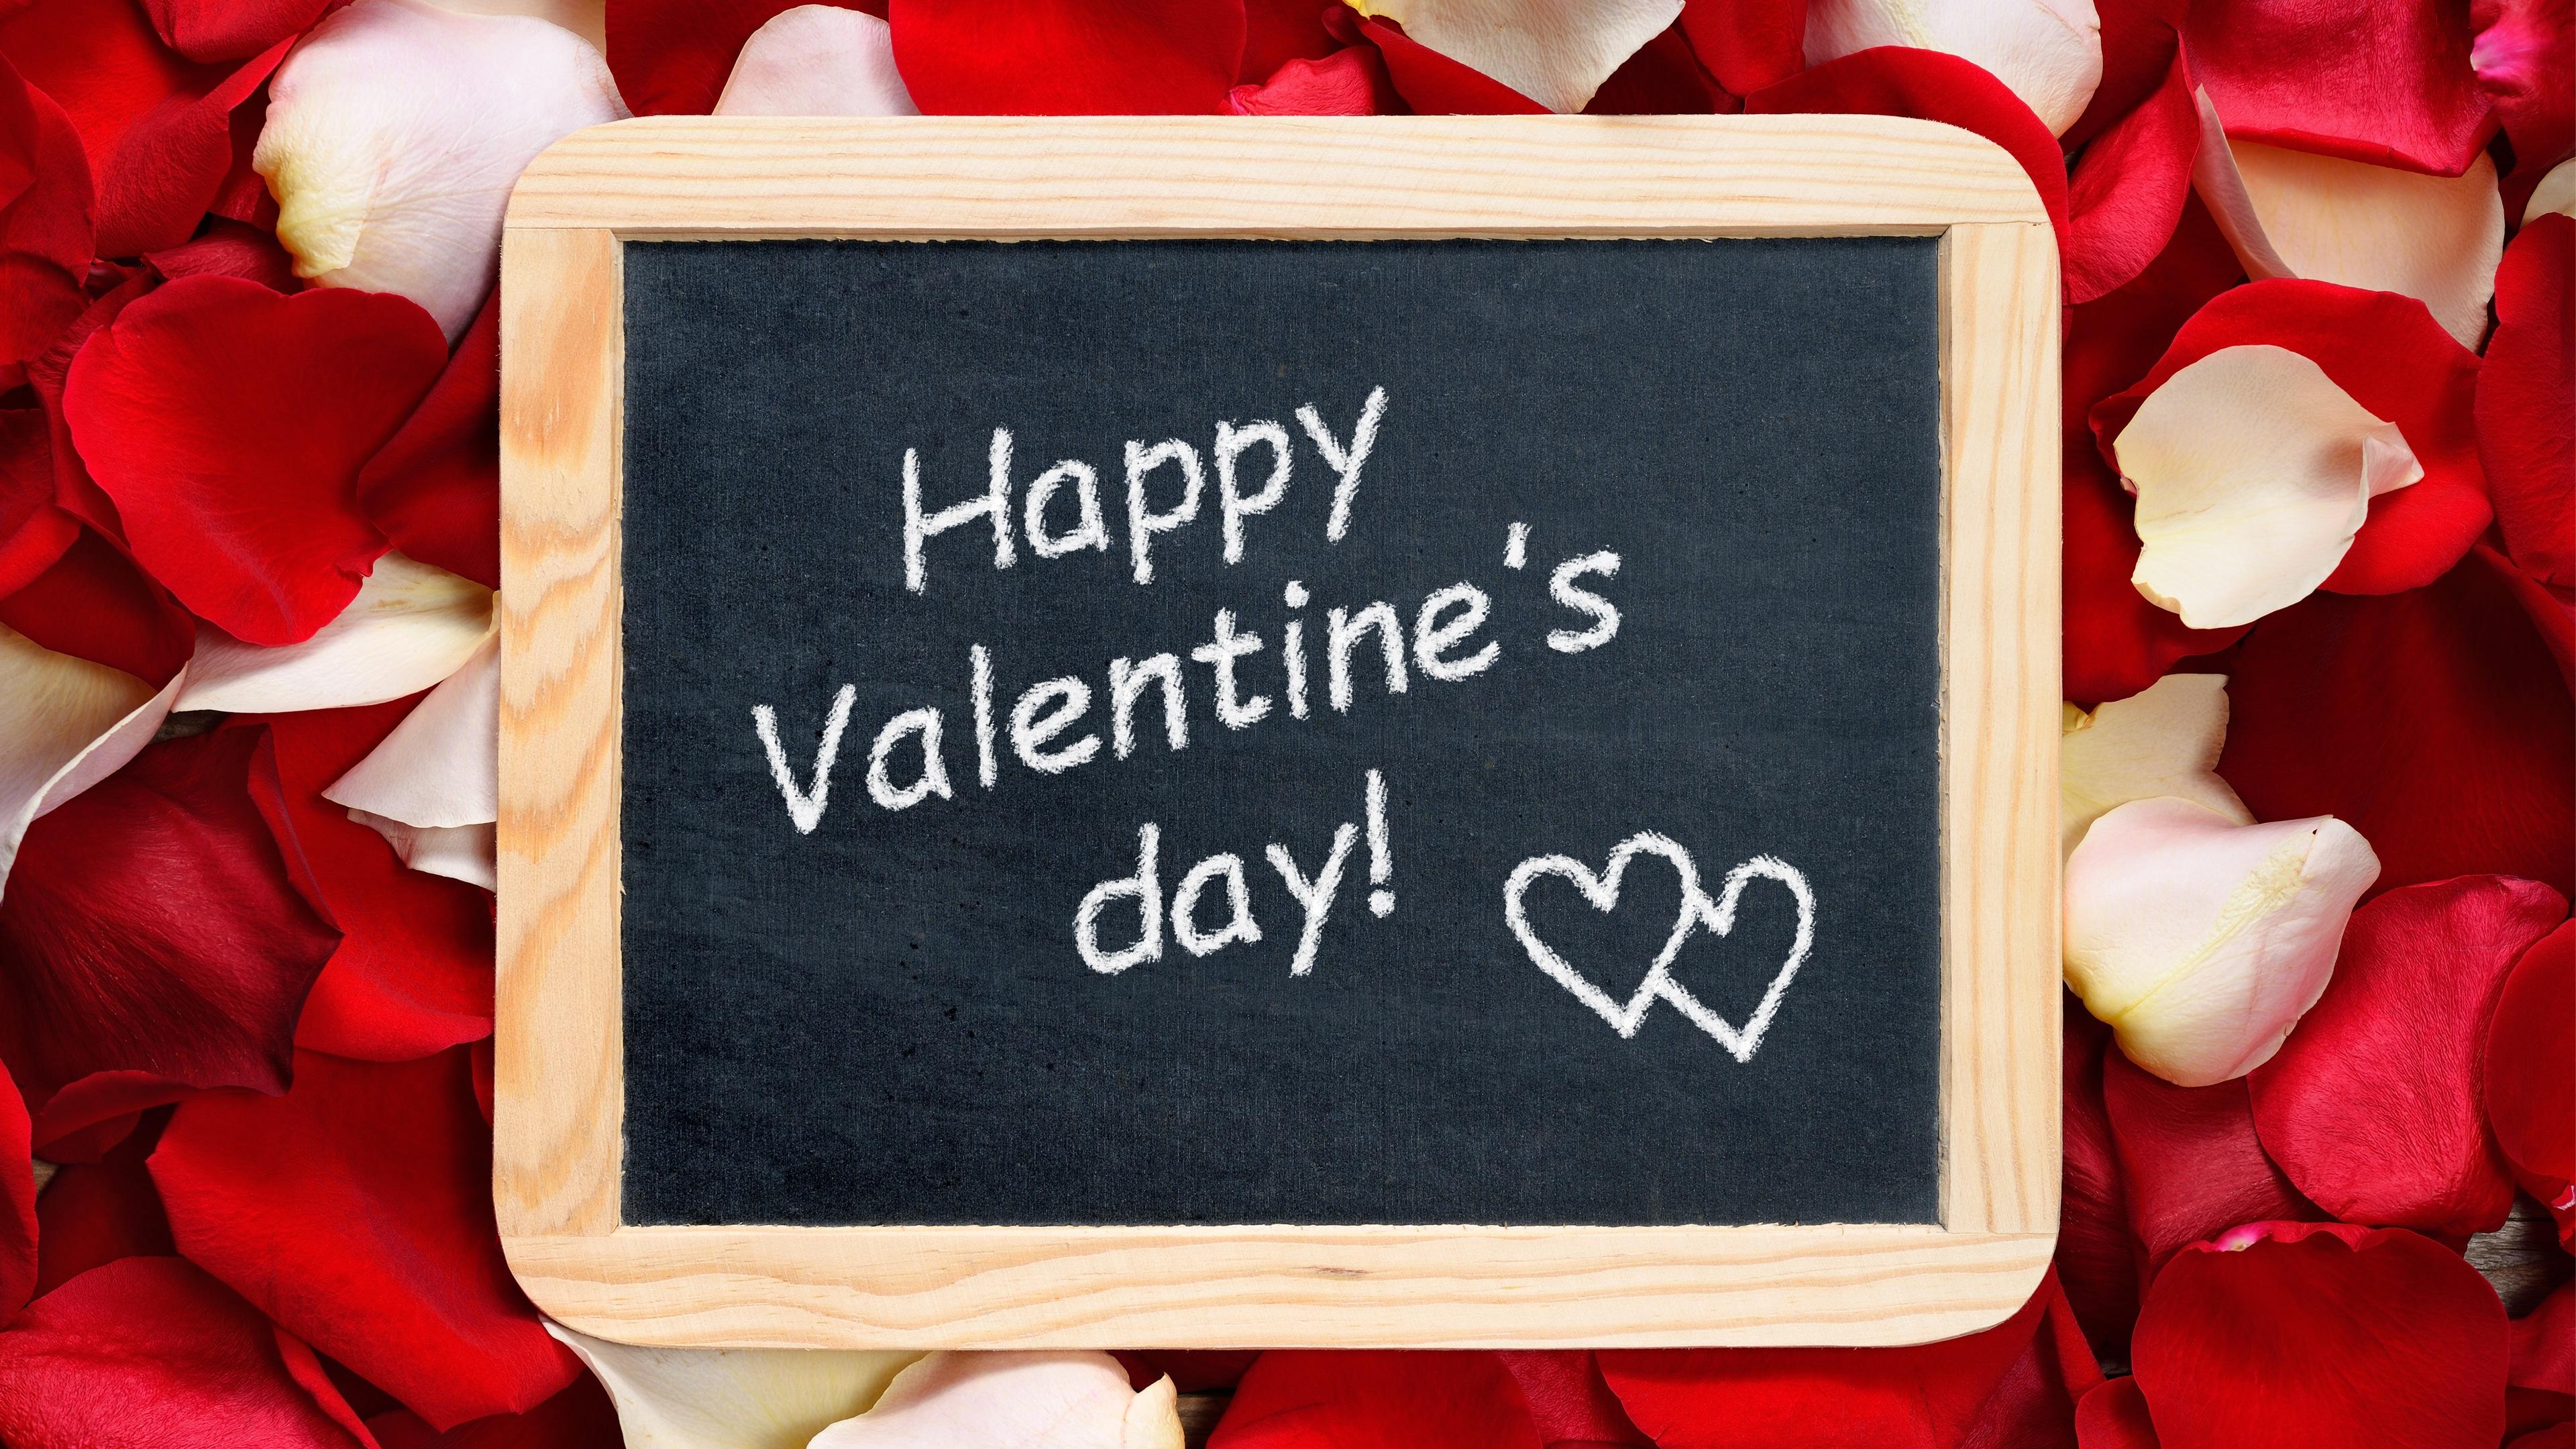 Happy Valentines Day Rose Petals Wallpaper in jpg format